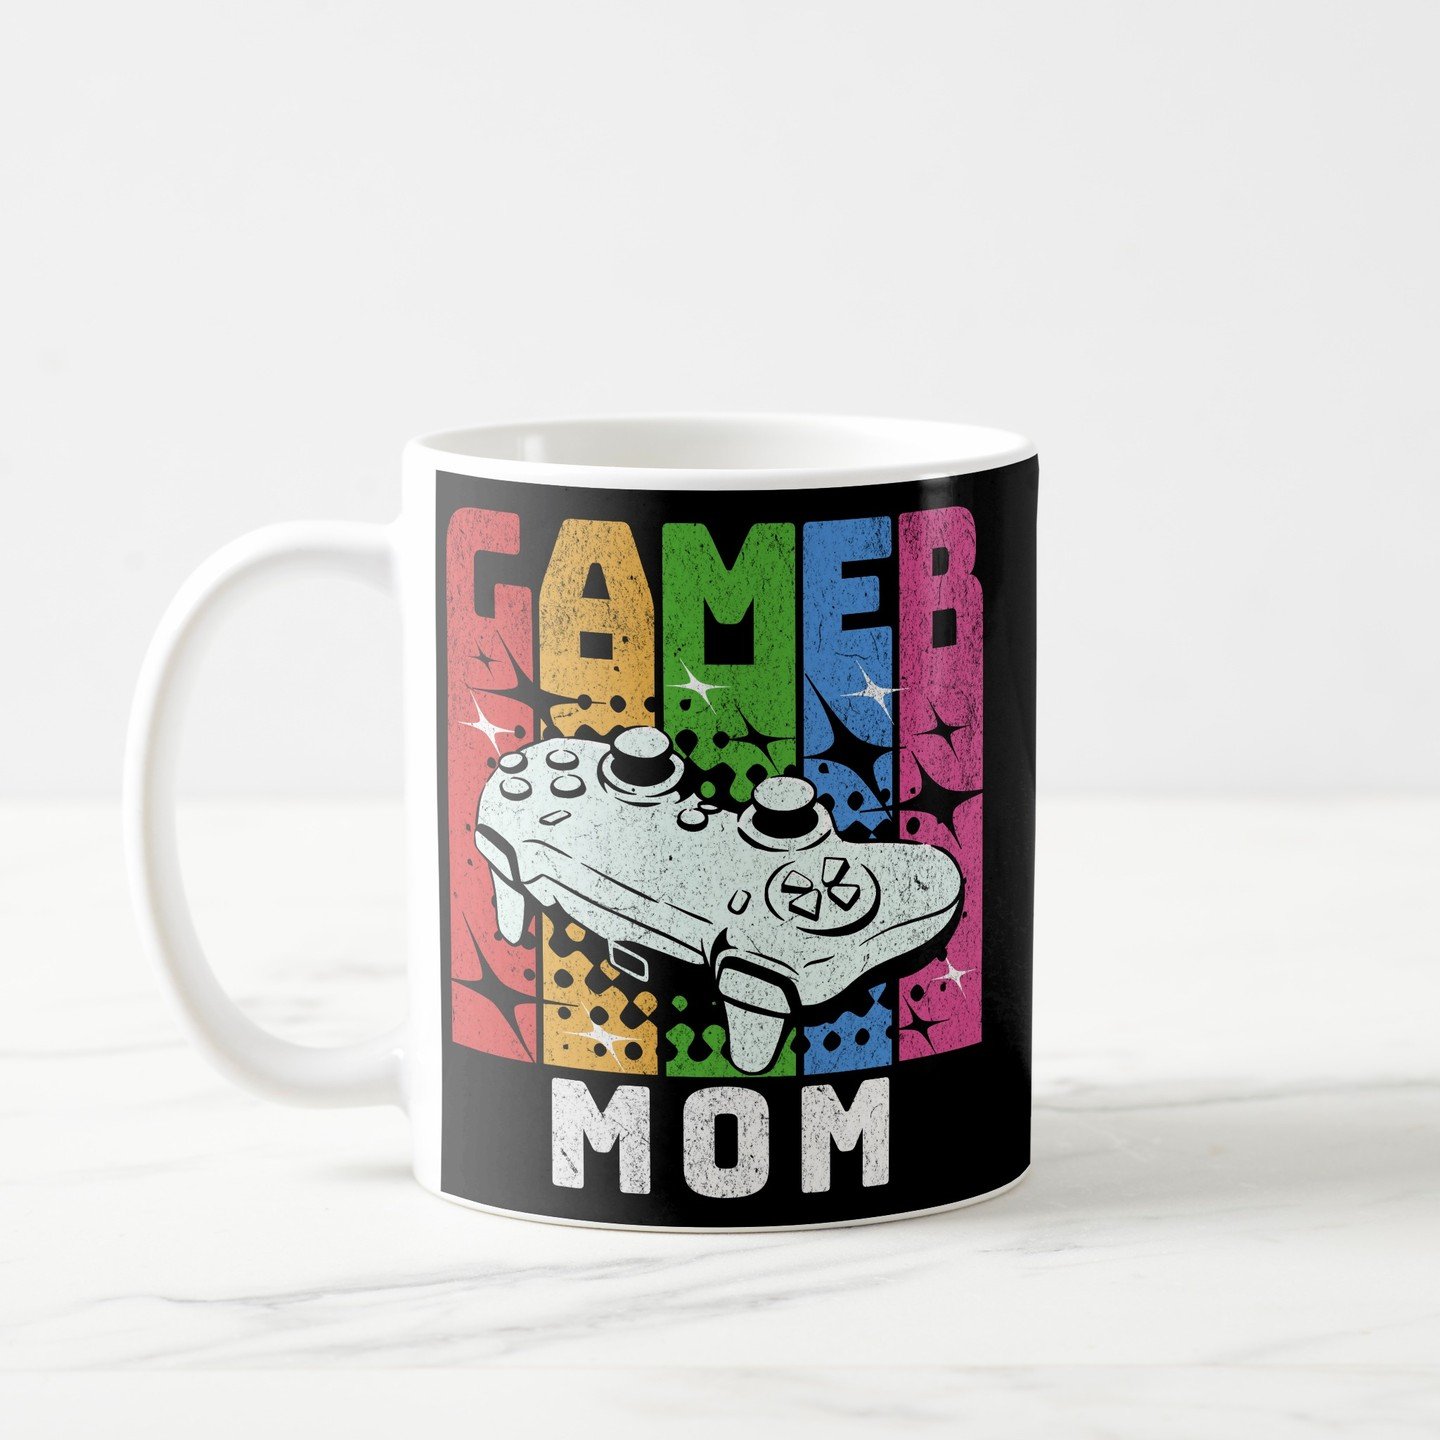 For the Gaming Mom! #linkinbio
.
#zazzle #redbubble #teepublic #zazzlemade #shirt #stickers #mugs #mothersday #formom #gamermom #gamingmom #gamer